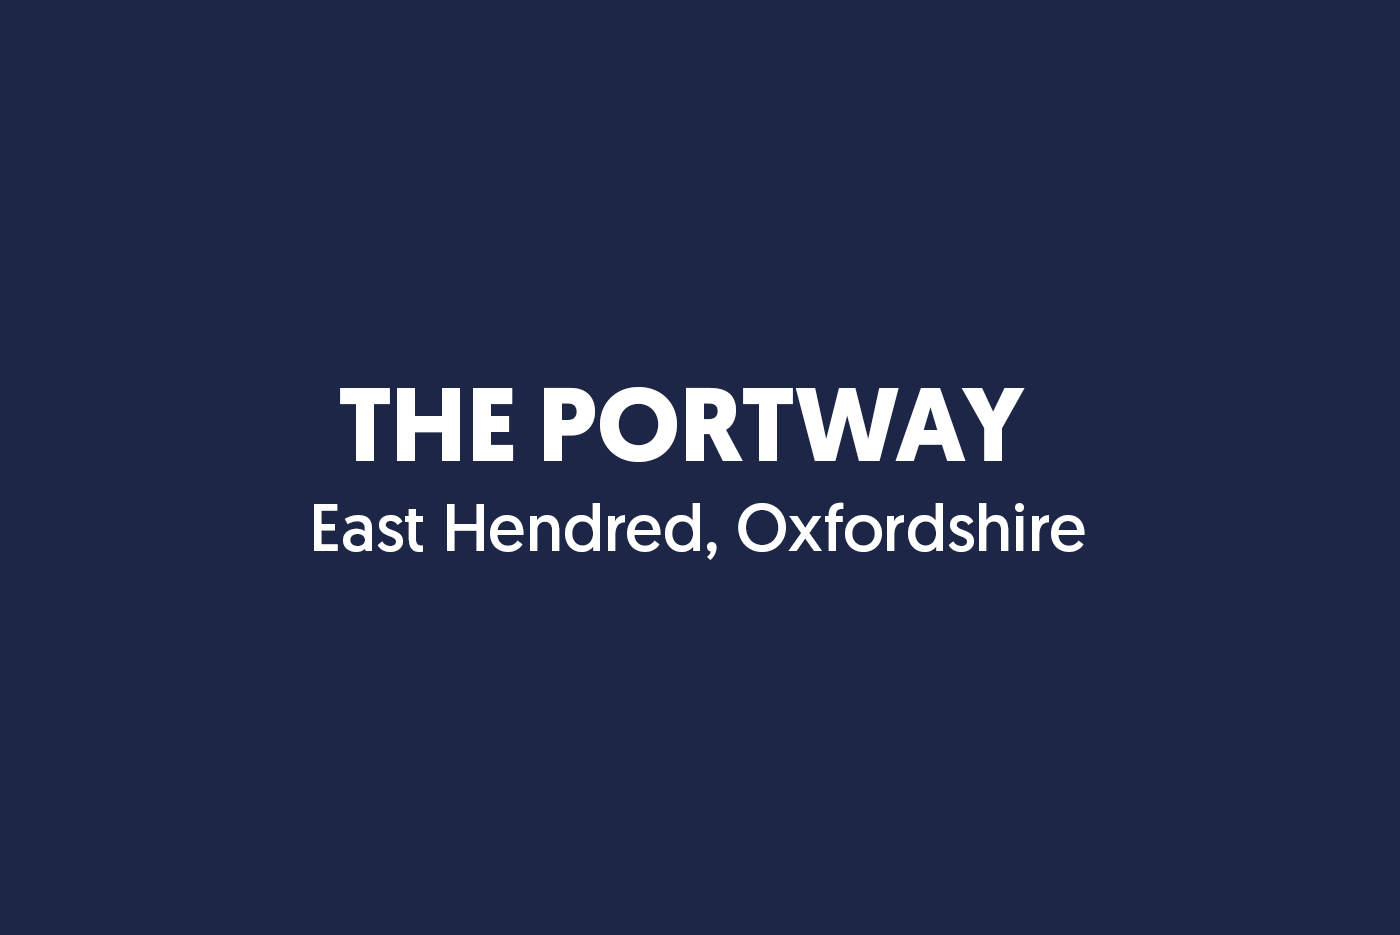 The Portway